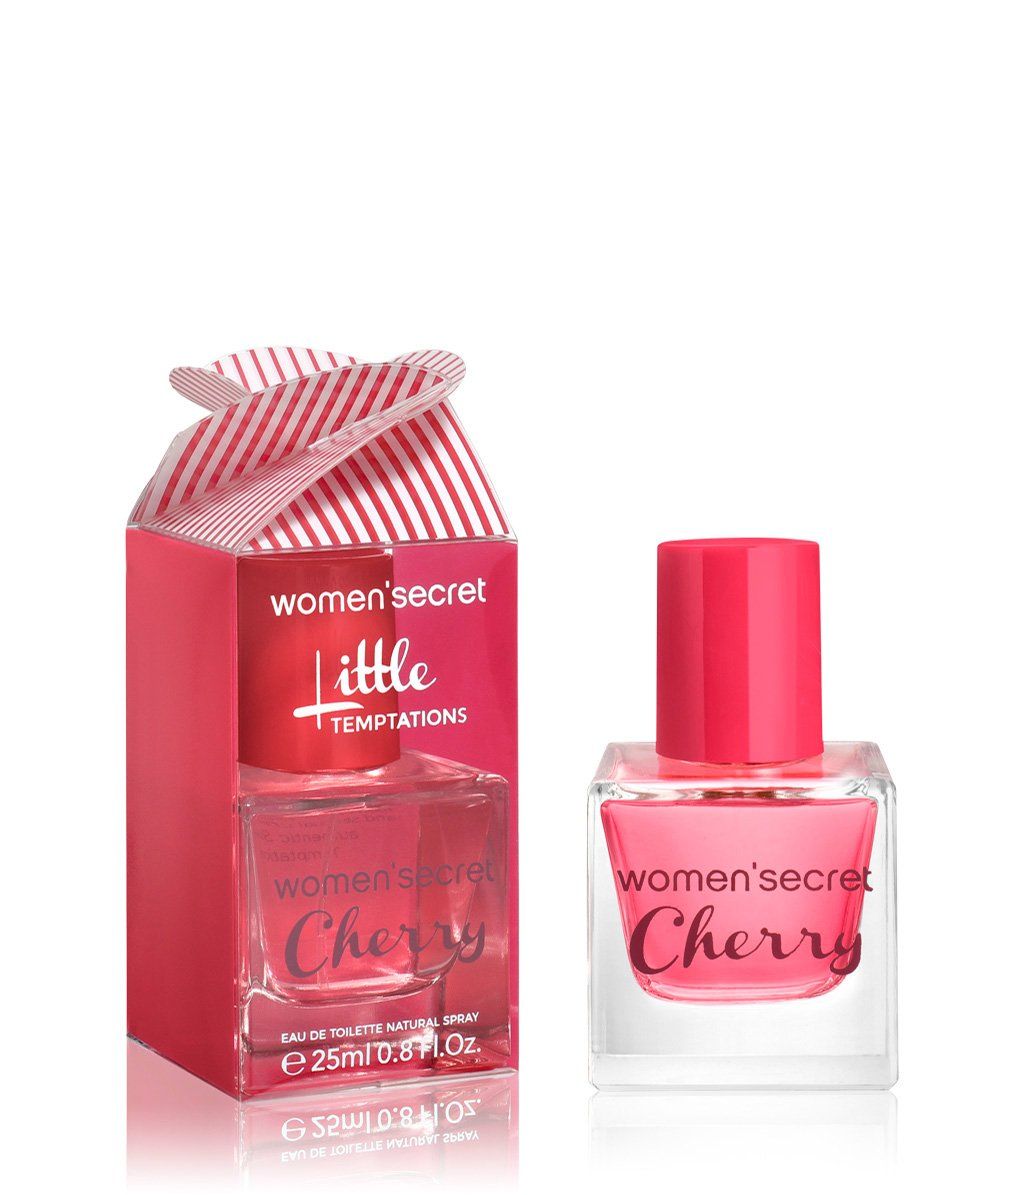 Parfum Cherry - Homecare24